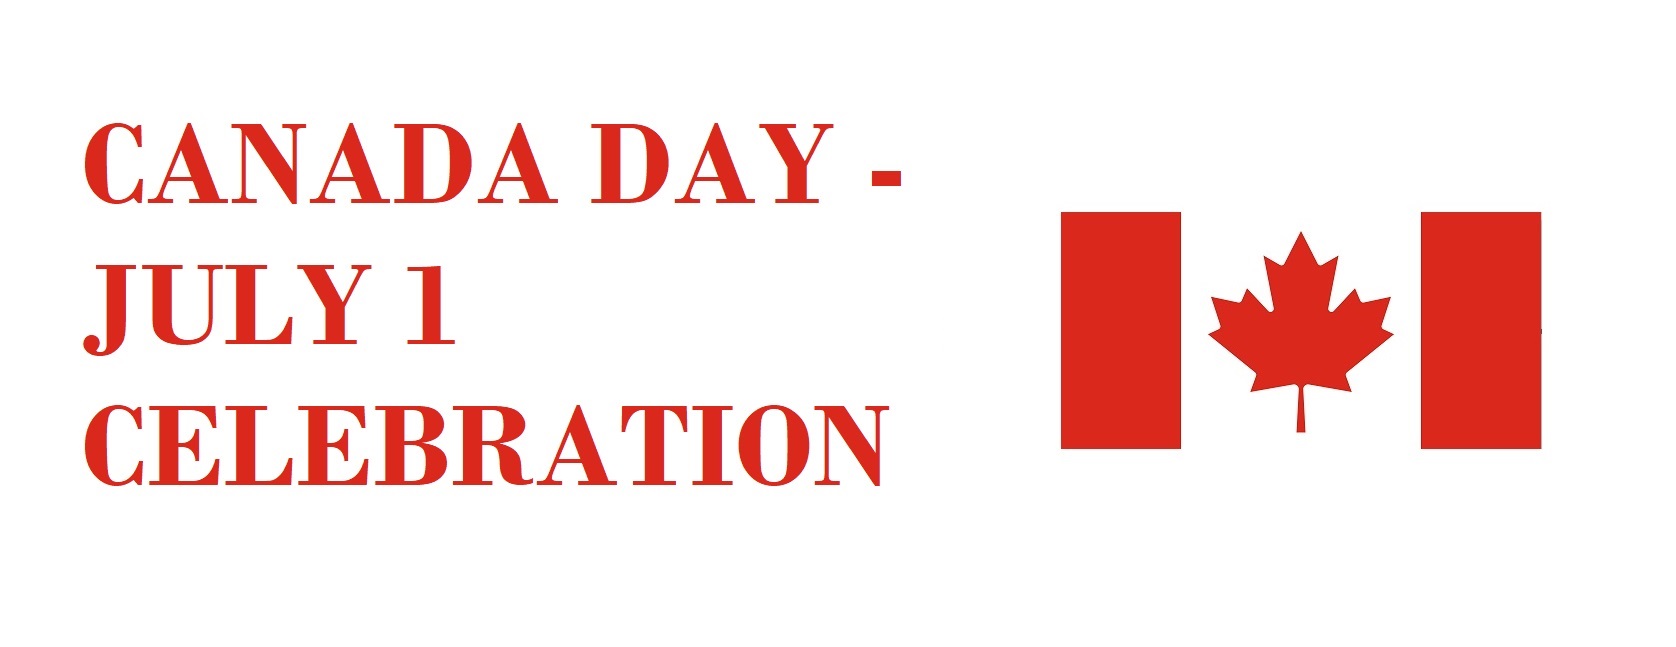 Canada Day National Holiday, Canada